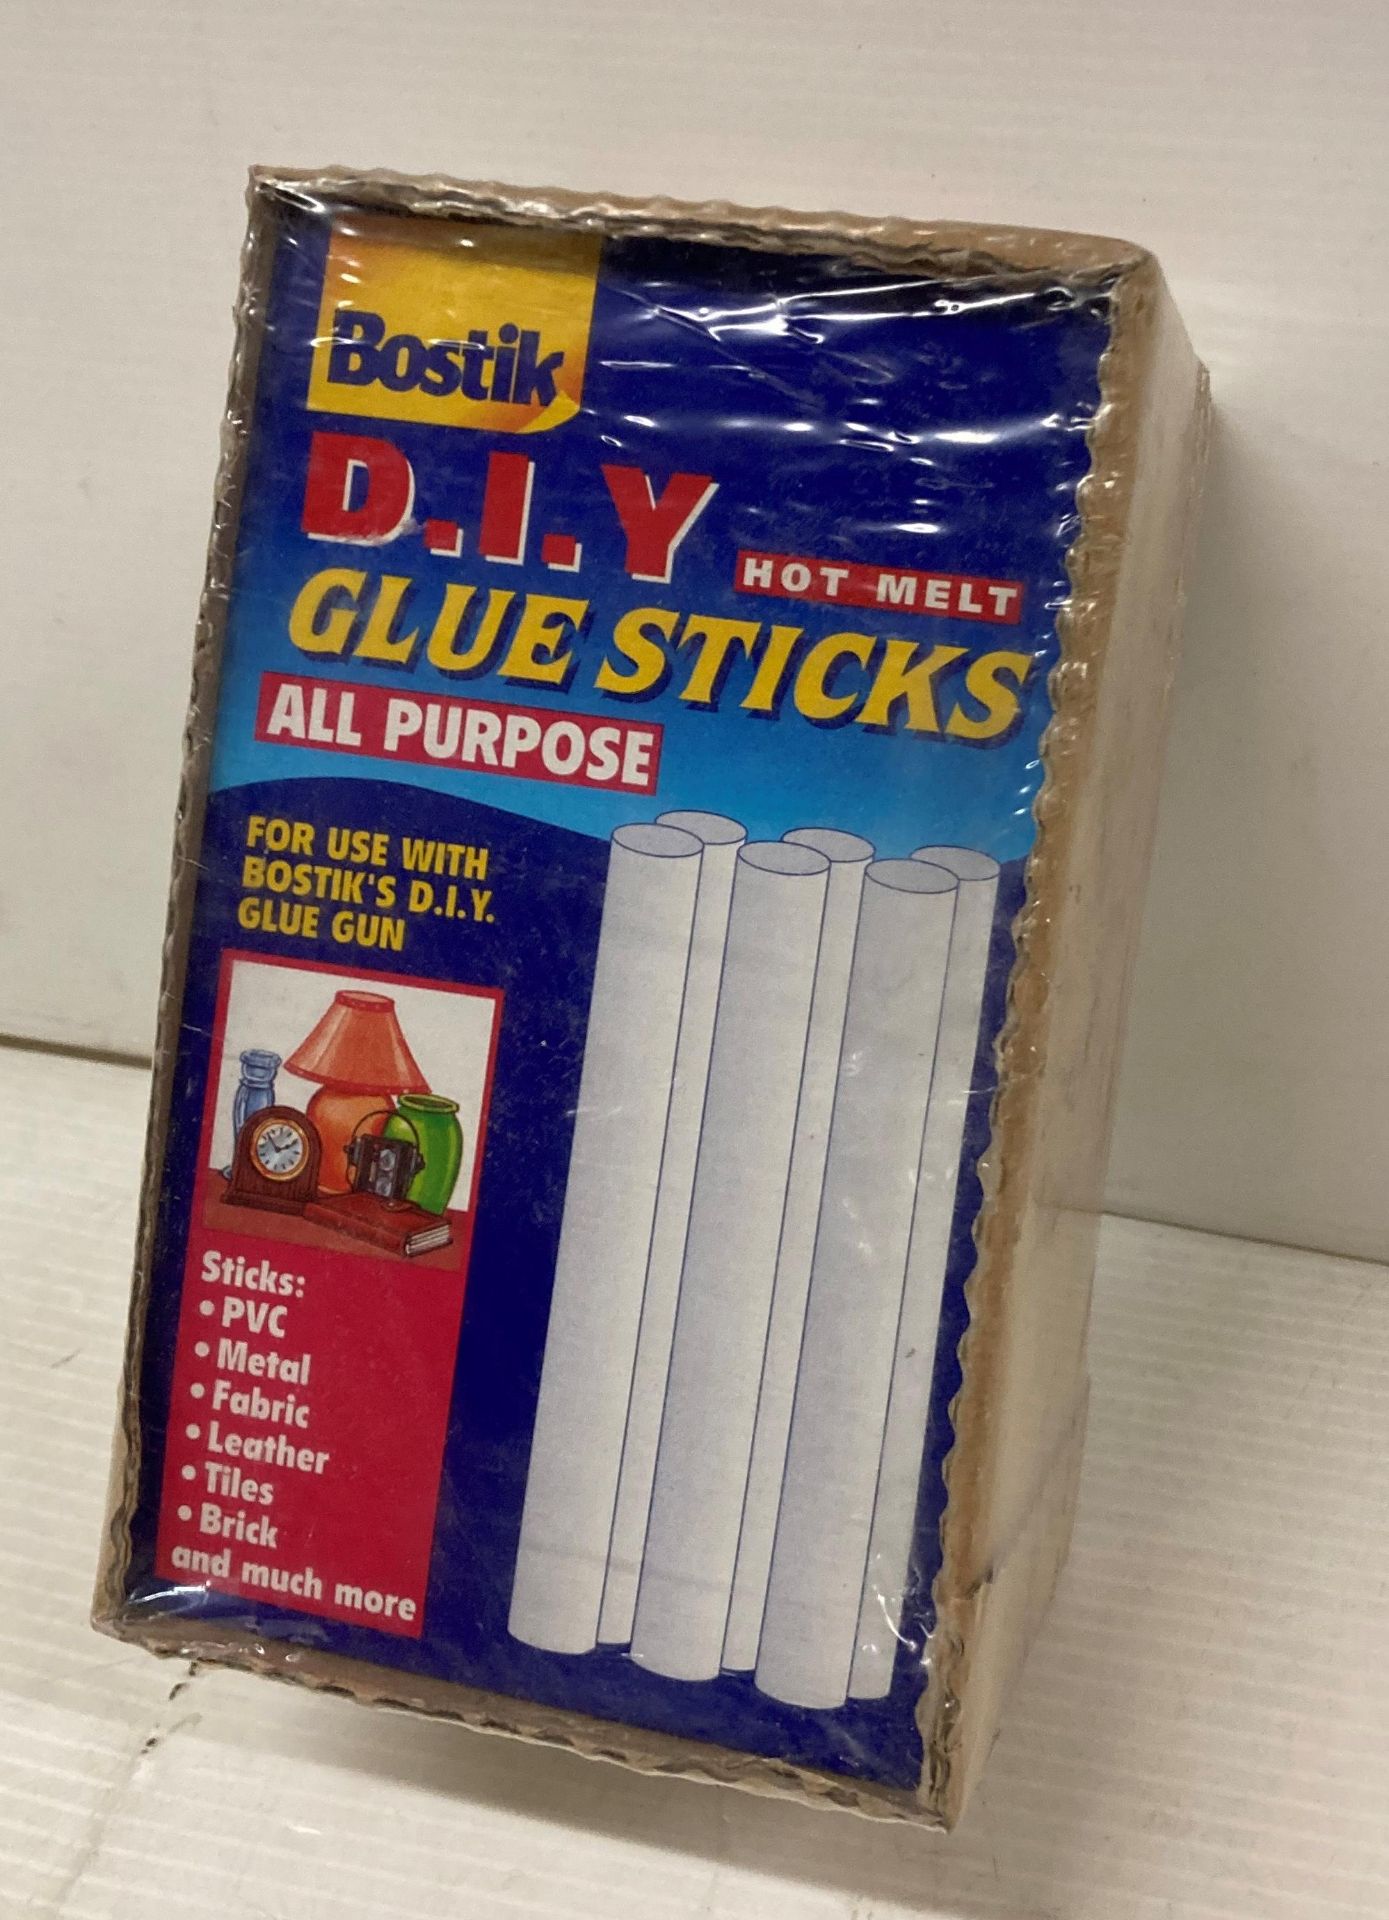 40 x boxes of Bostick DIY Hot Melt all purpose glue sticks (each box contains 6 packs of 6 sticks)